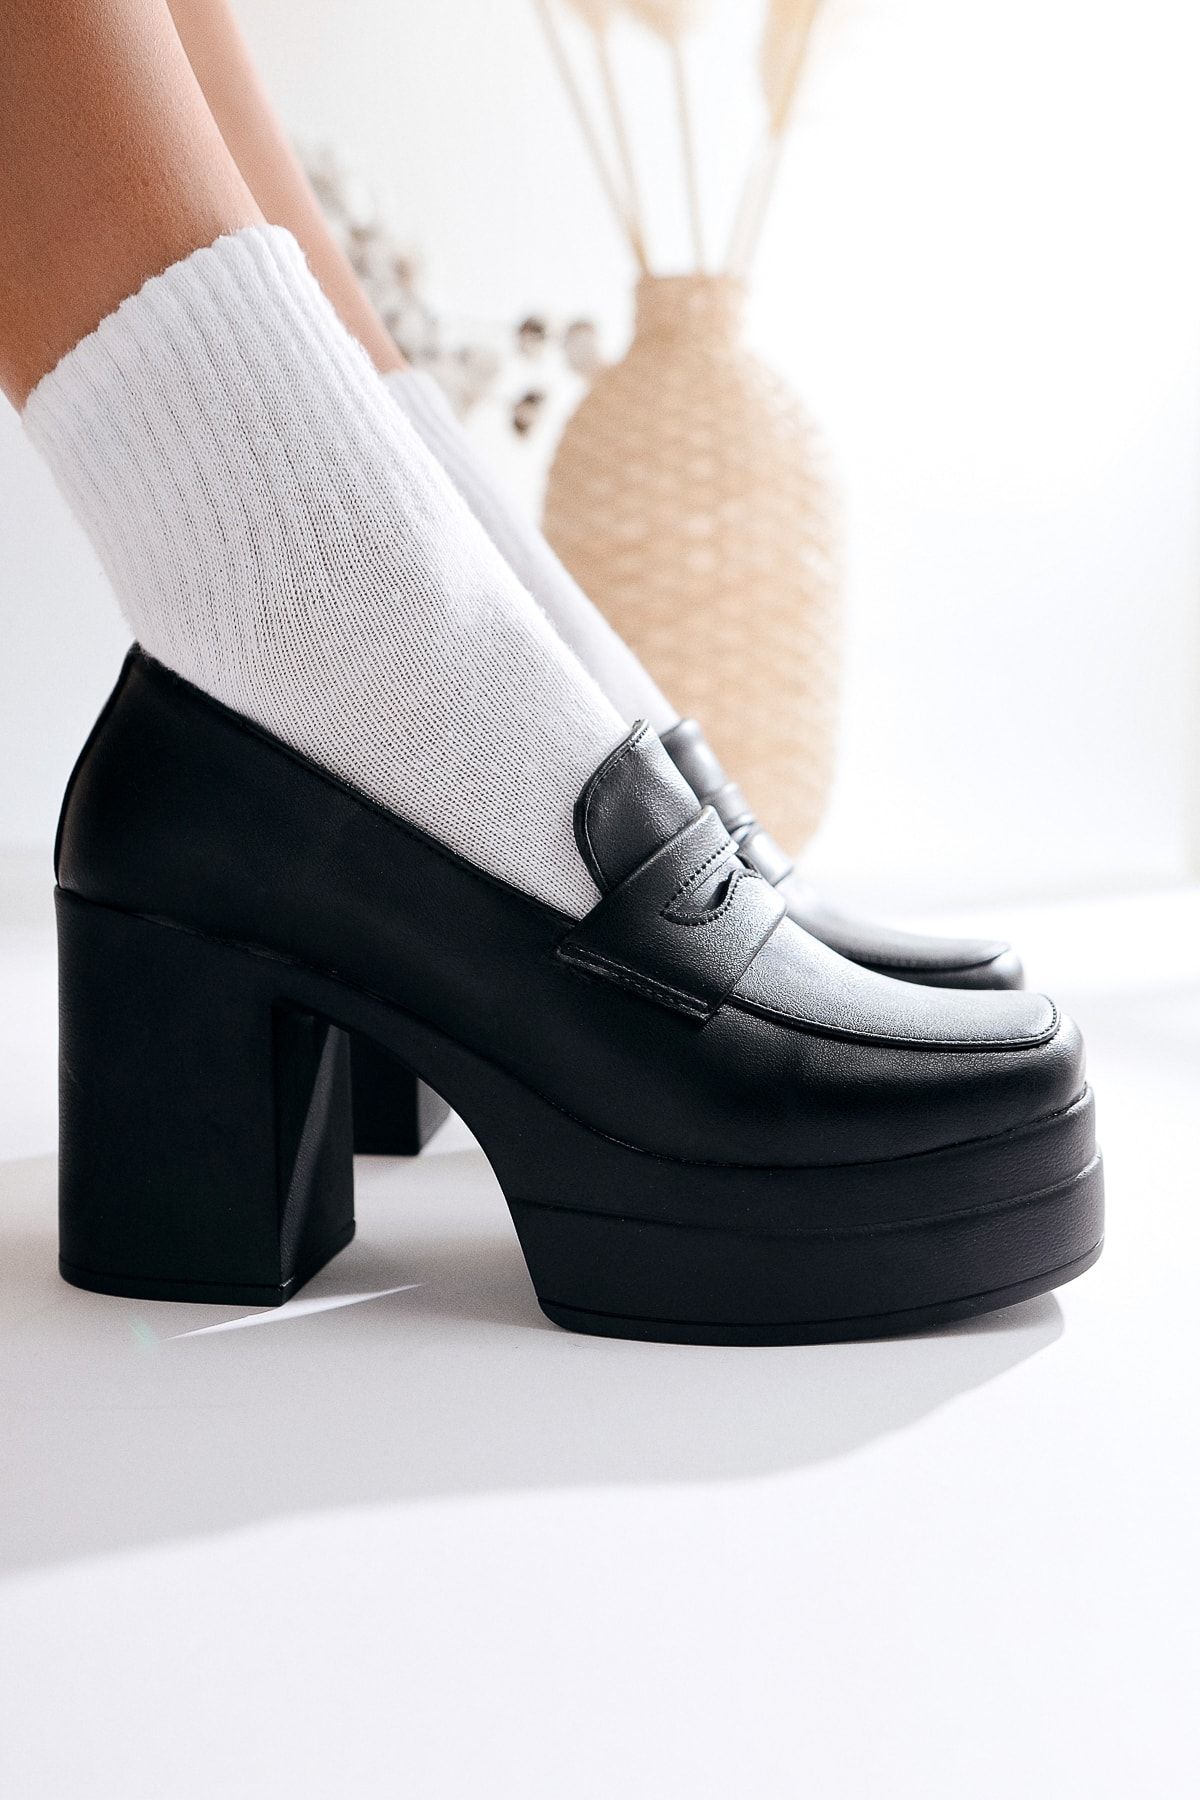 Limoya Candace Siyah Topuklu Platformlu Kadın Ayakkabı